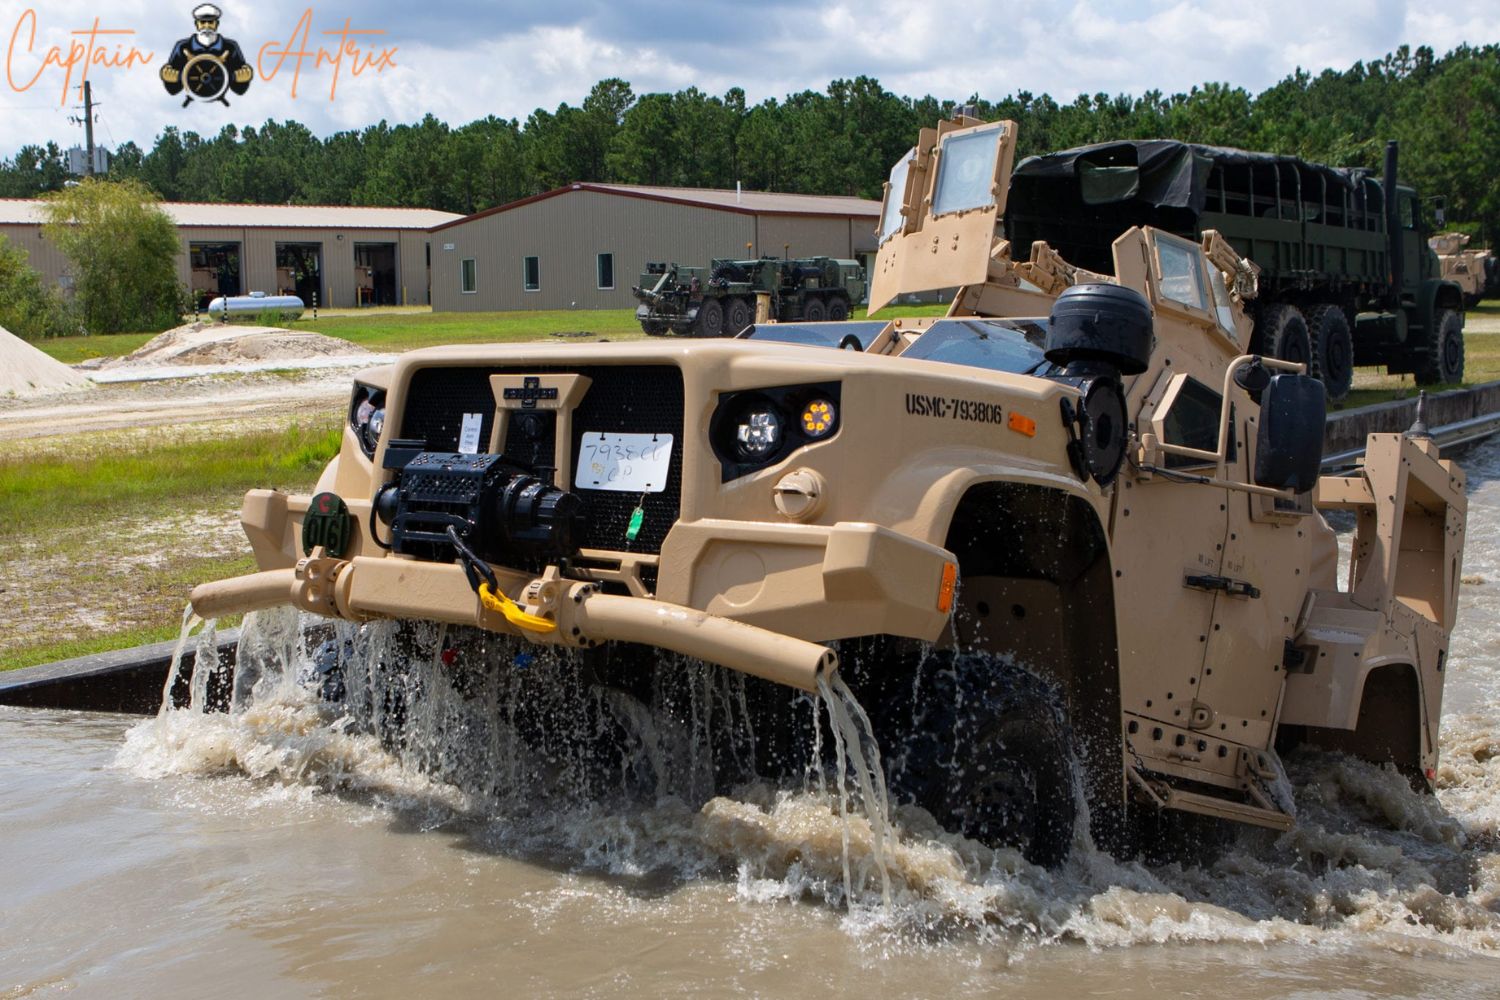 Oshkosh Defense JLTV: U.S. Army Awards Major Contract for Advanced Tactical Vehicles and Kits